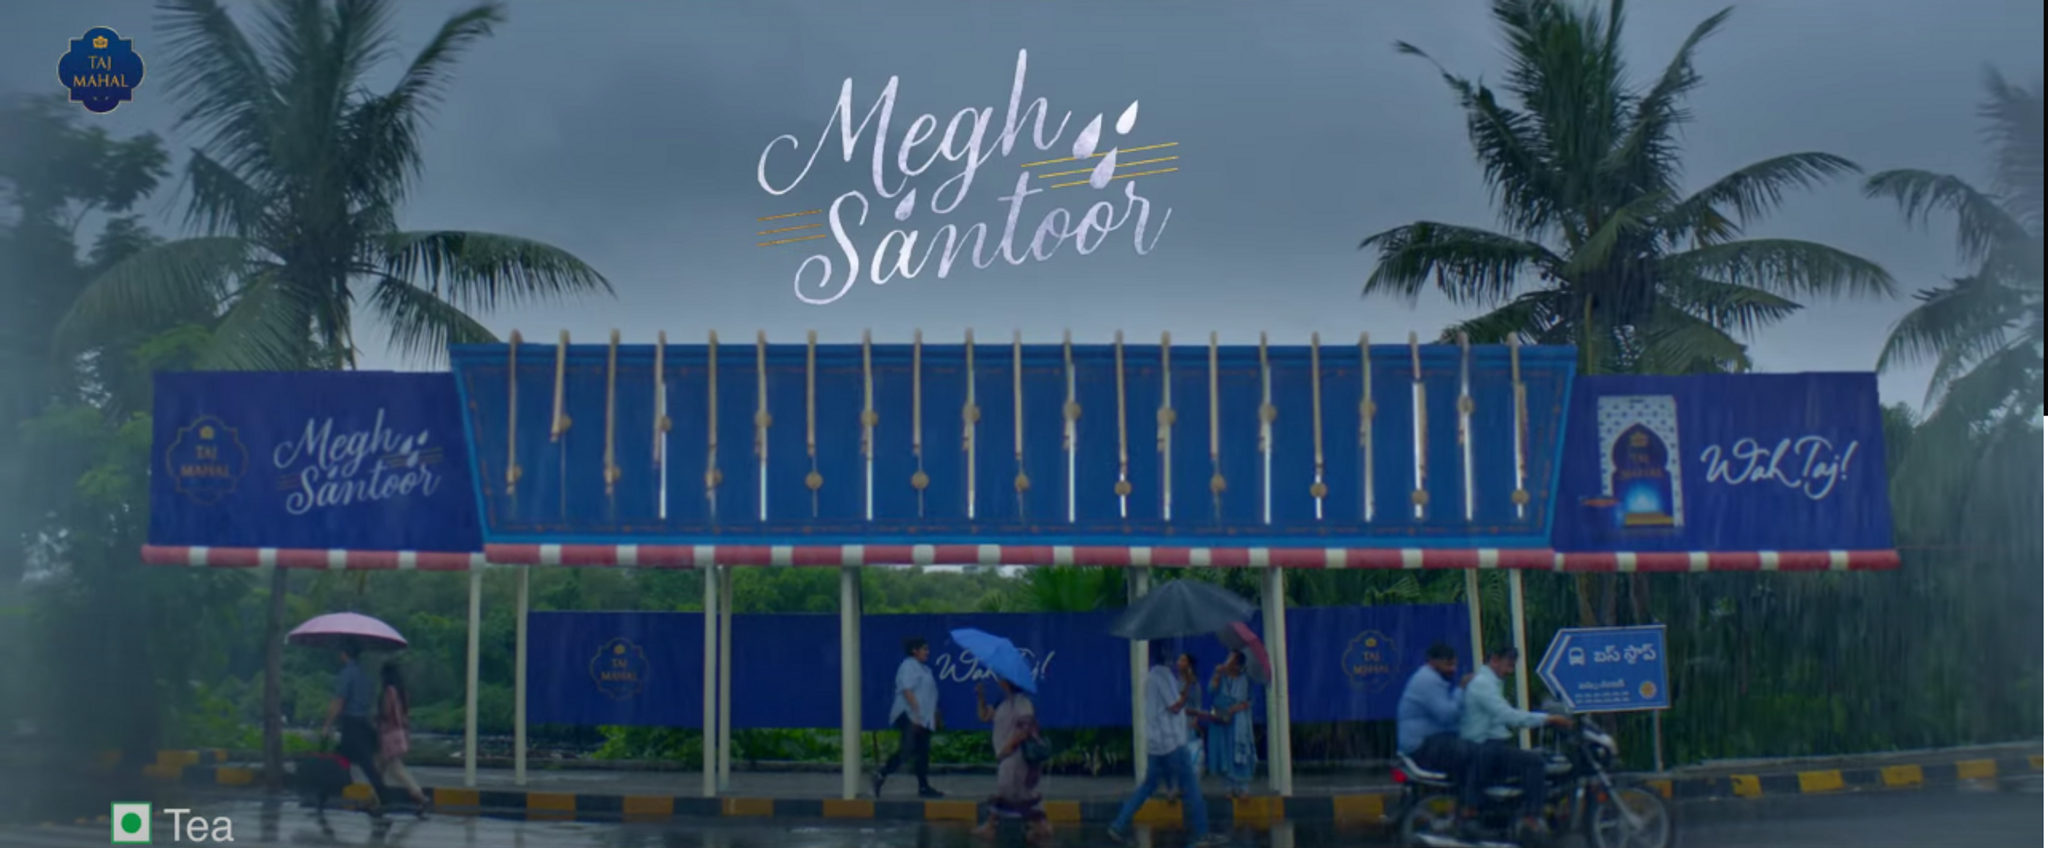 Taj Mahal Tea rain billboard honours monsoon season